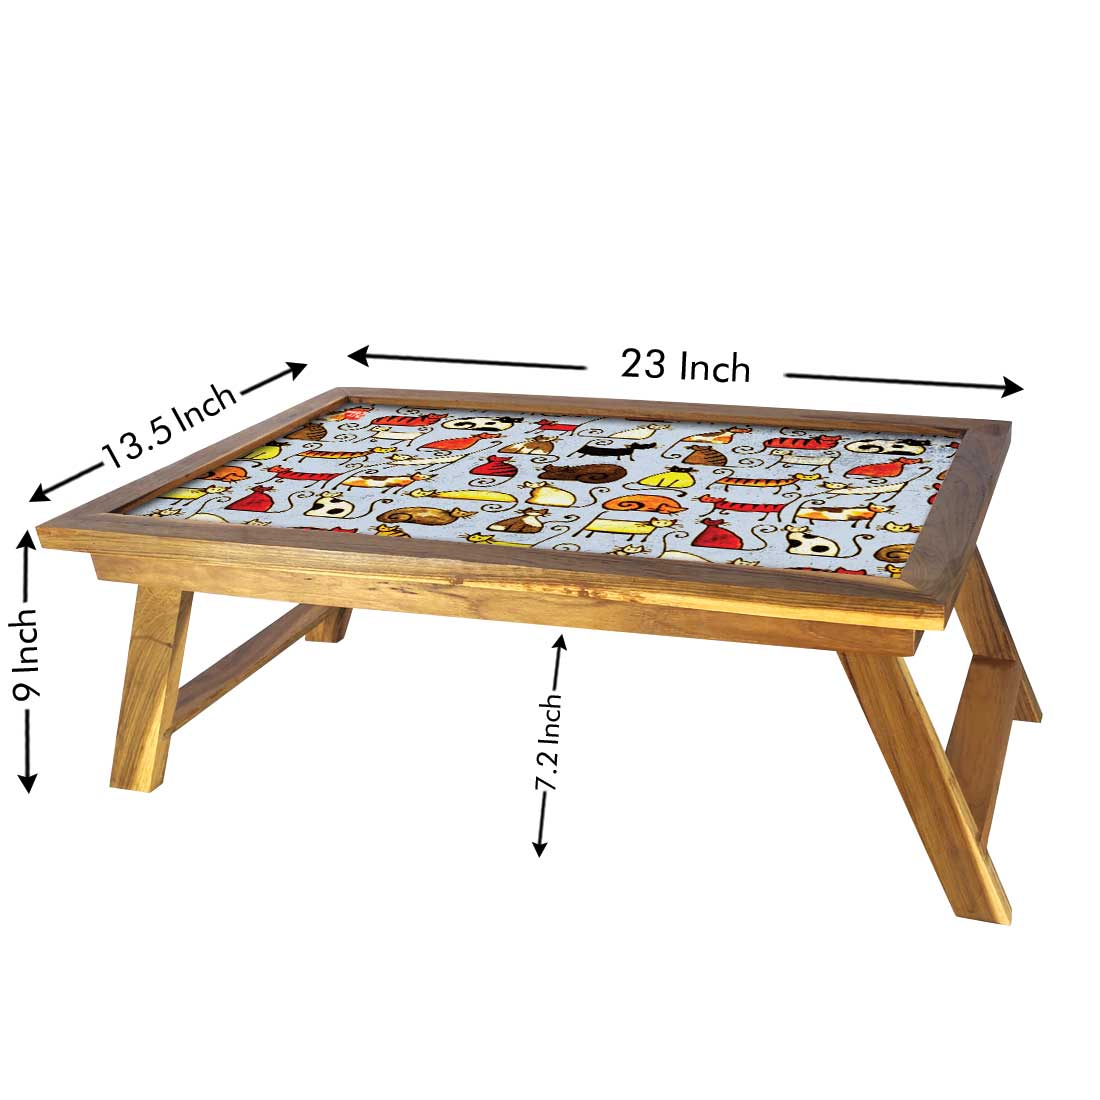 Nutcase Folding Laptop Table For Home Bed Lapdesk Breakfast Table Foldable Teak Wooden Study Desk - Cat Doodles Nutcase